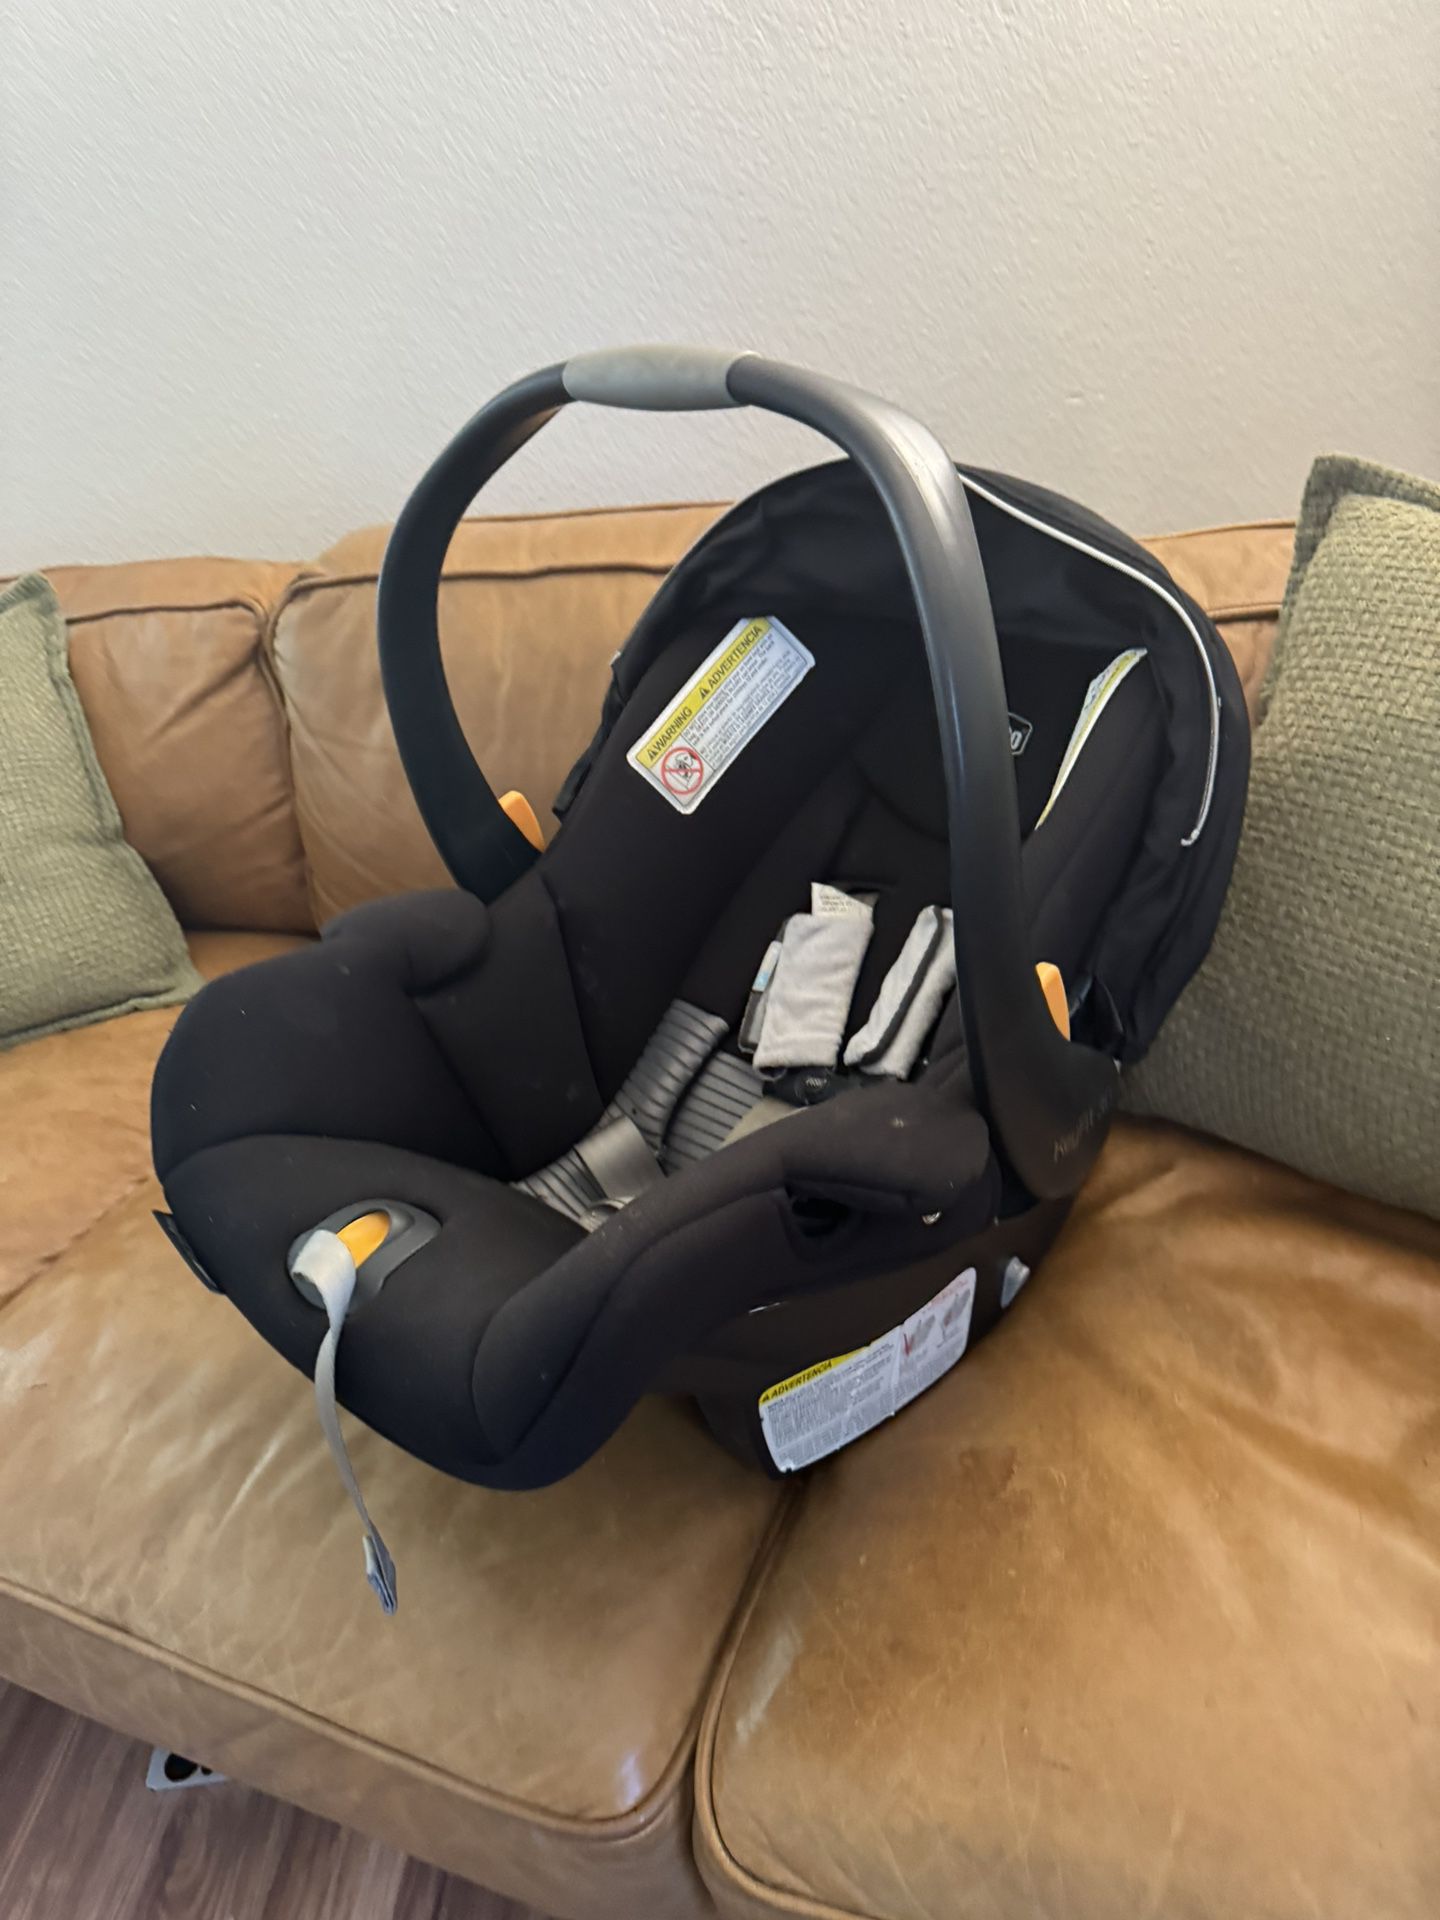 Chicco Keyfit 30 “Best infant car seat”